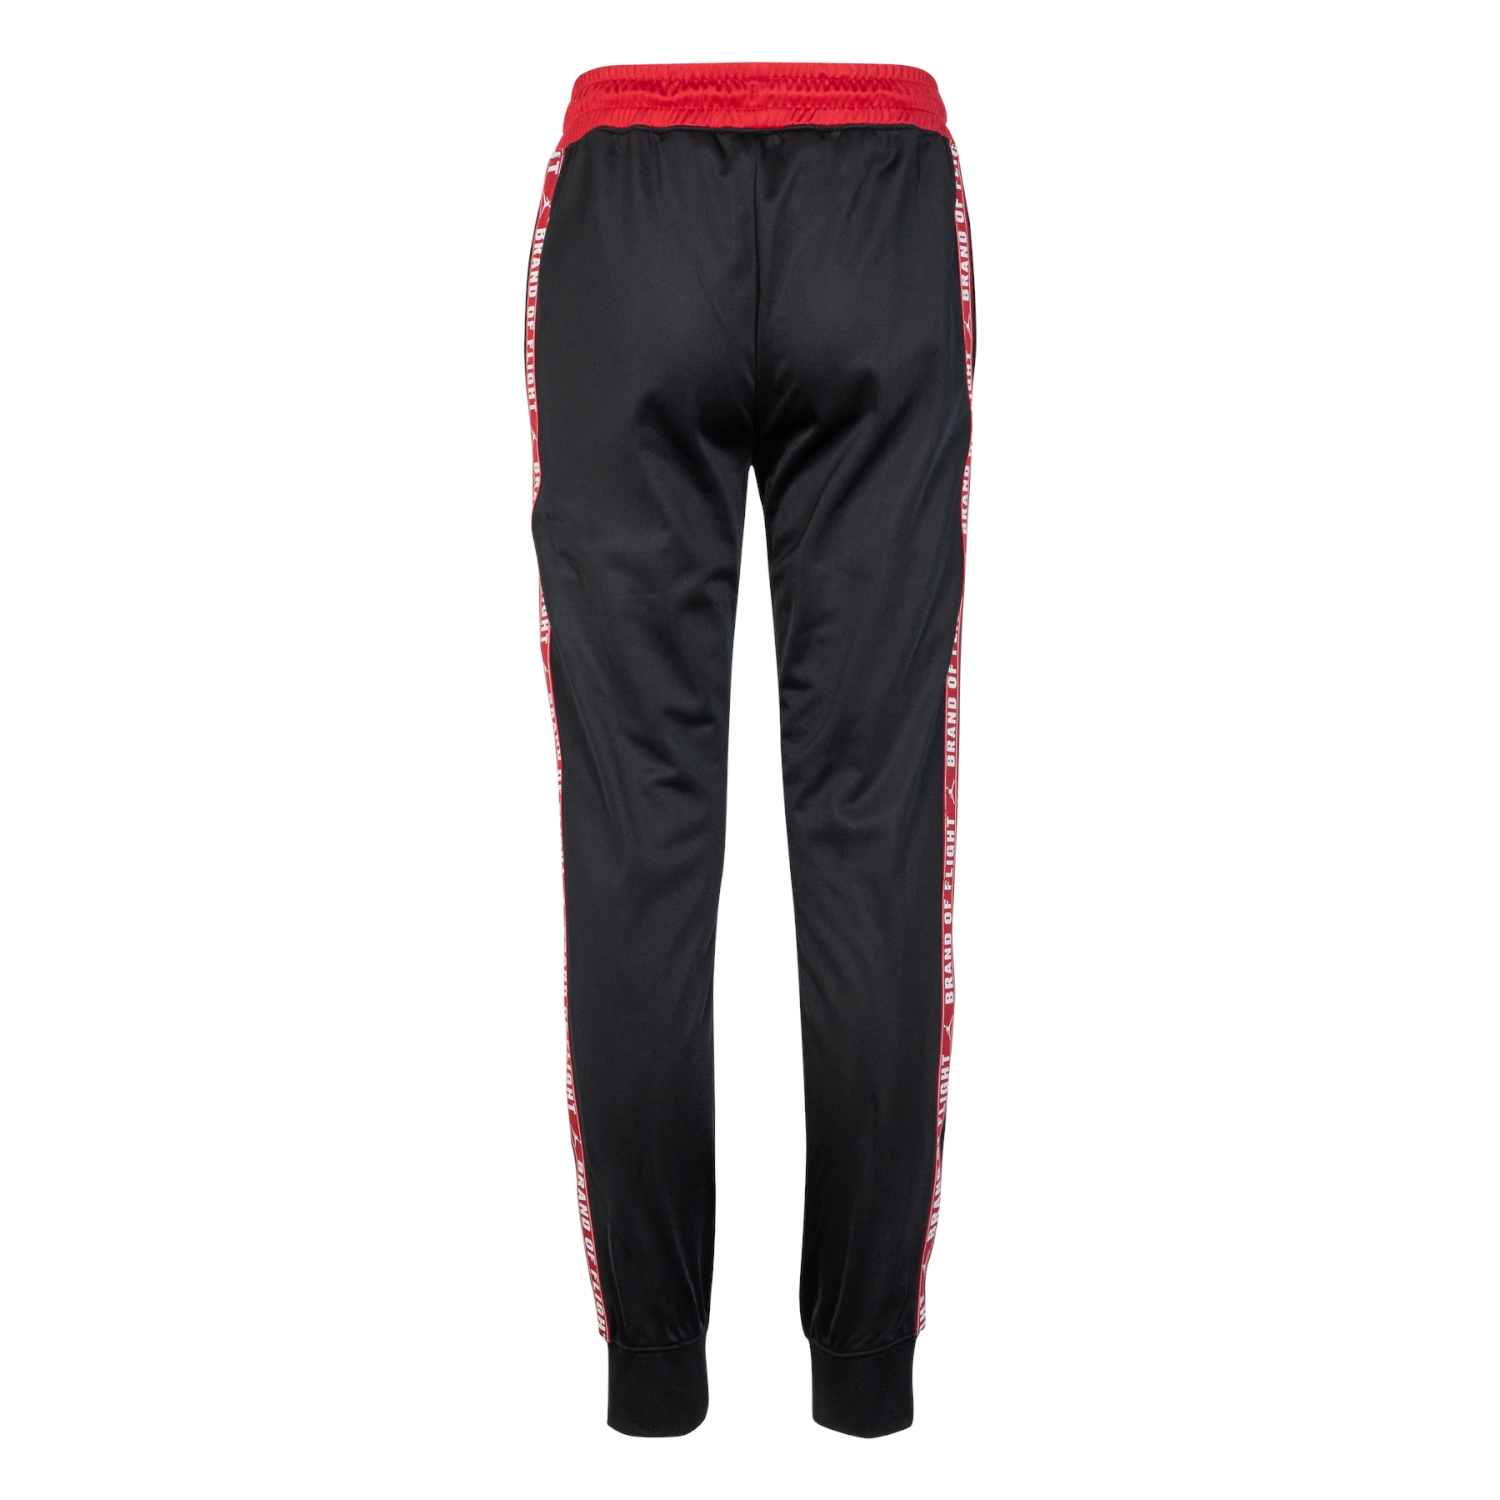 Jordan Jumpman Flight Tape Little Kids Track Pants - Black/Red | Sportitude